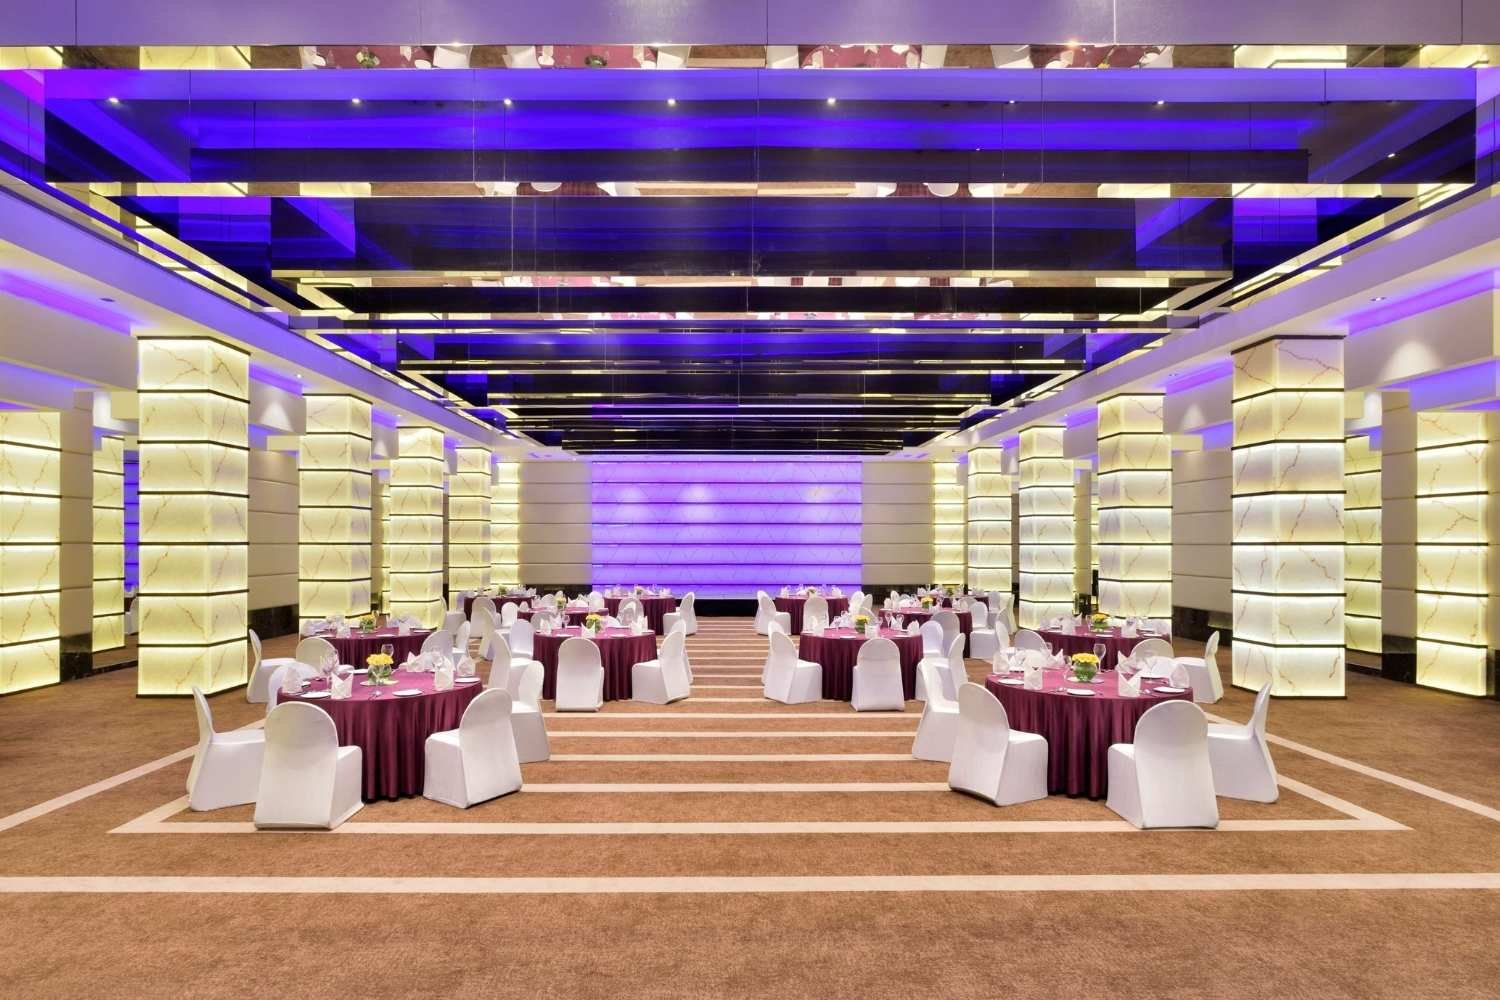 Dining arrangements at Radisson Blu Atria hotel banquet halls